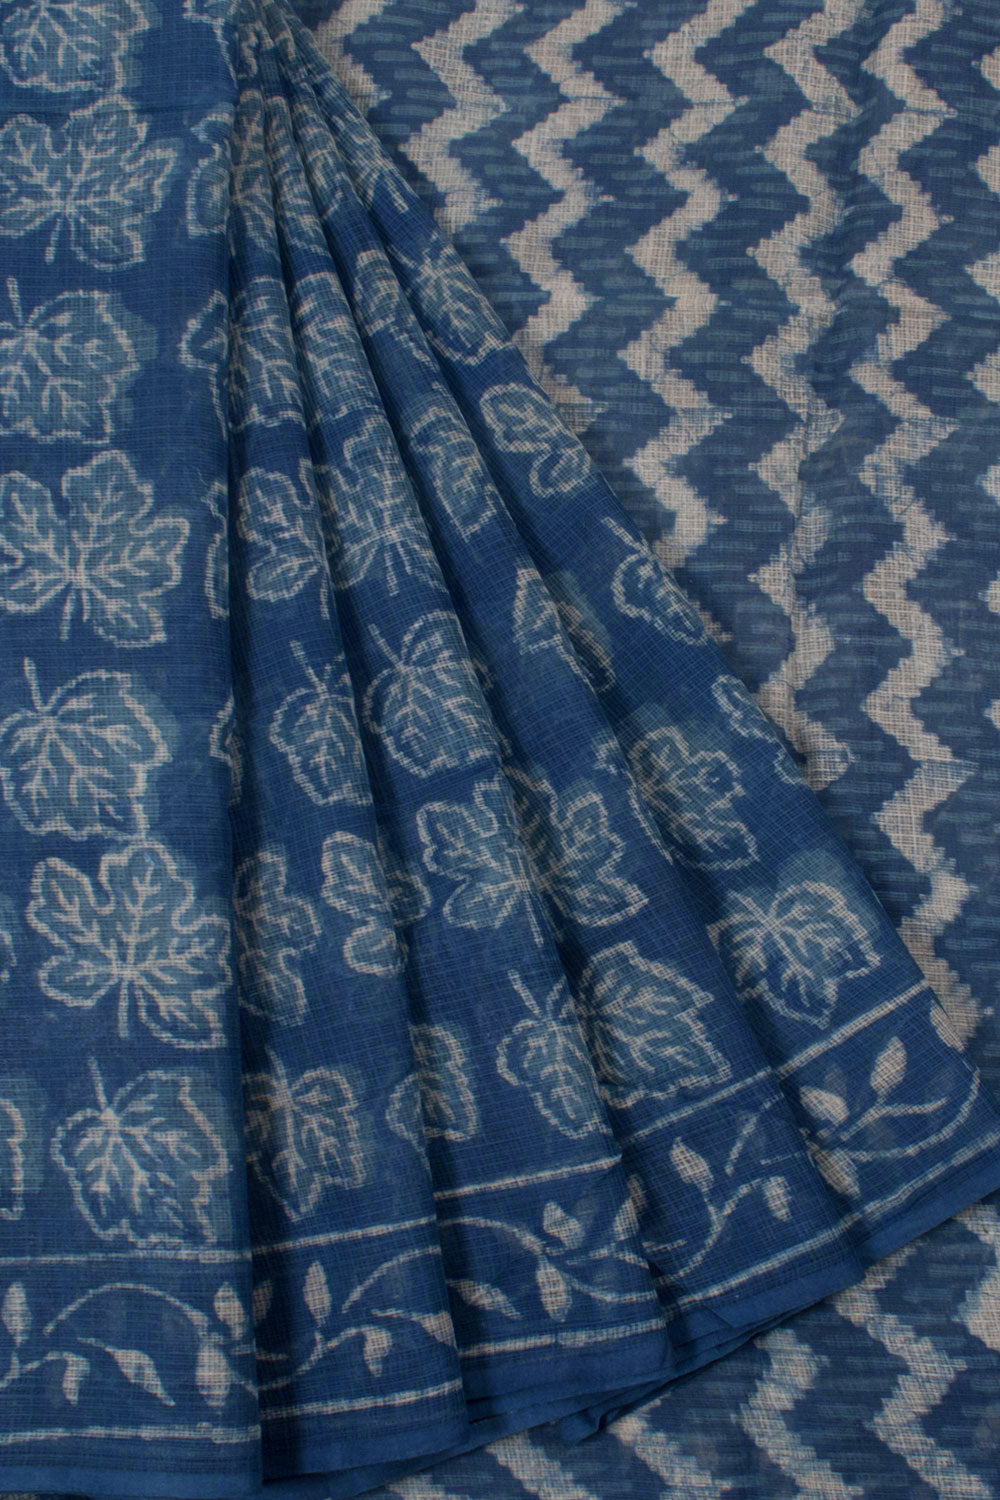 Dabu Printed Chanderi Kota Cotton Saree with Floral Design 